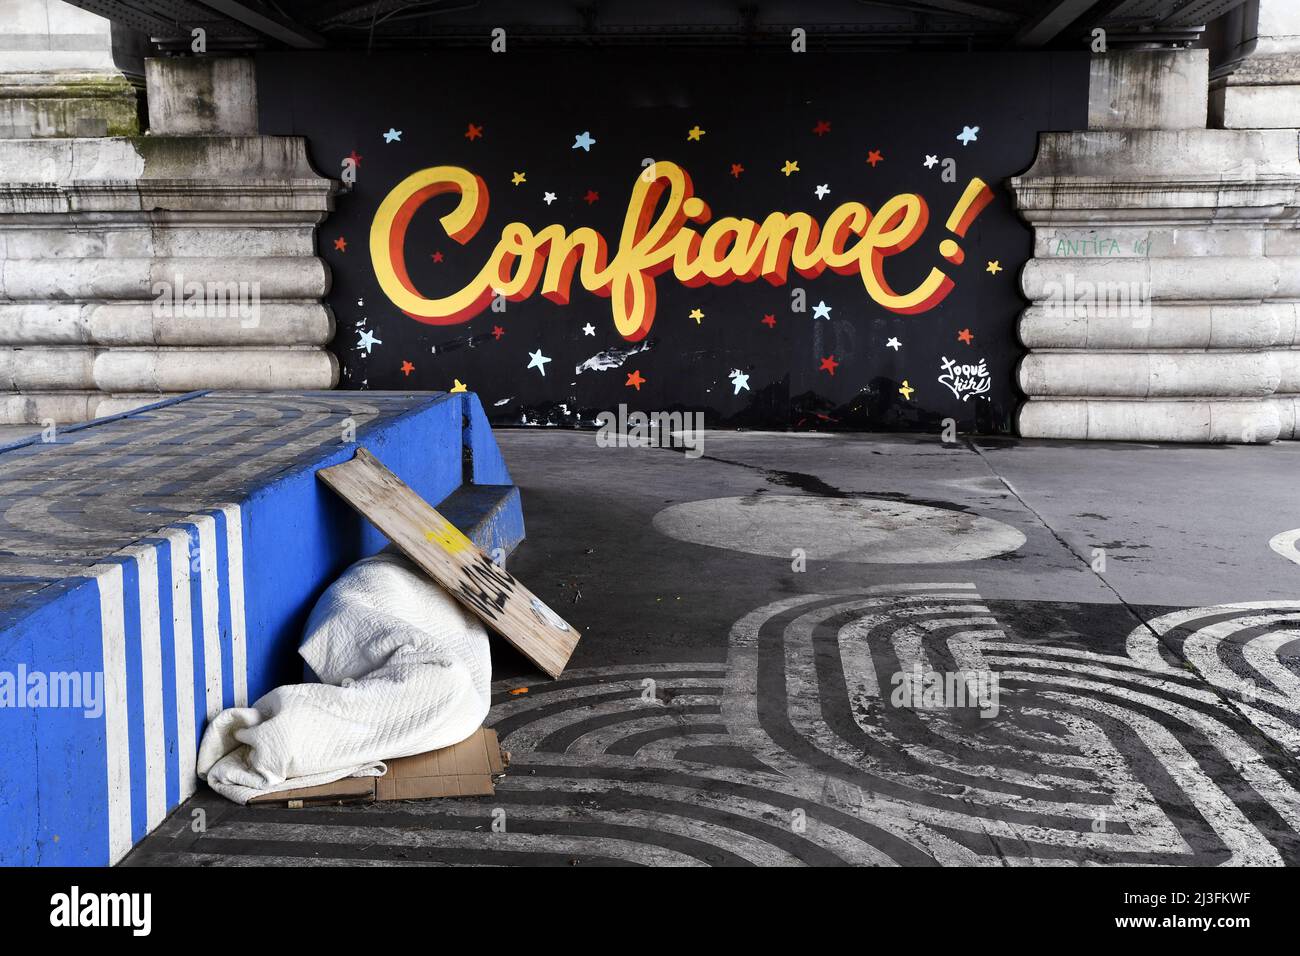 Homeless sleeping under aerial métro - Paris 18th - France Stock Photo